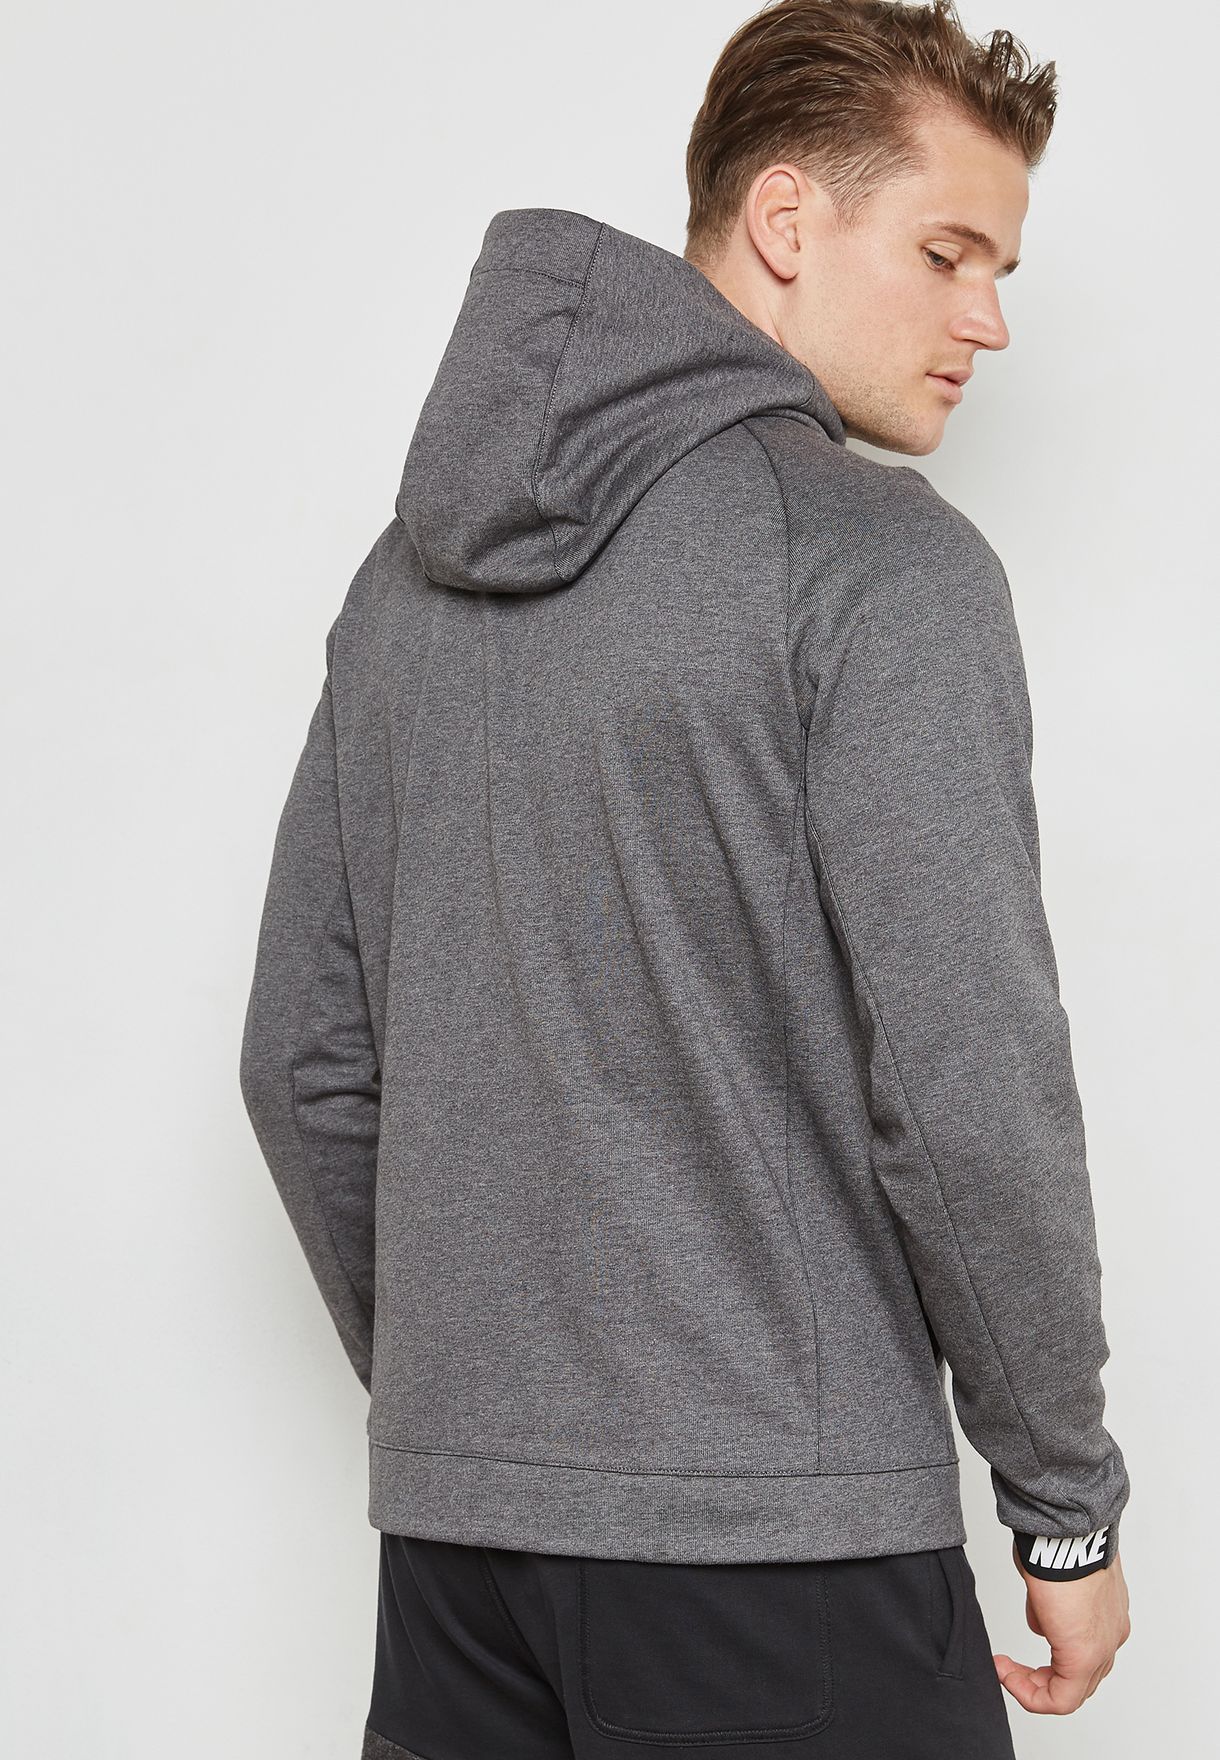 Buy Nike Grey Av15 Fleece Hoodie For Men In Mena Worldwide 861742 071 [ 1760 x 1220 Pixel ]